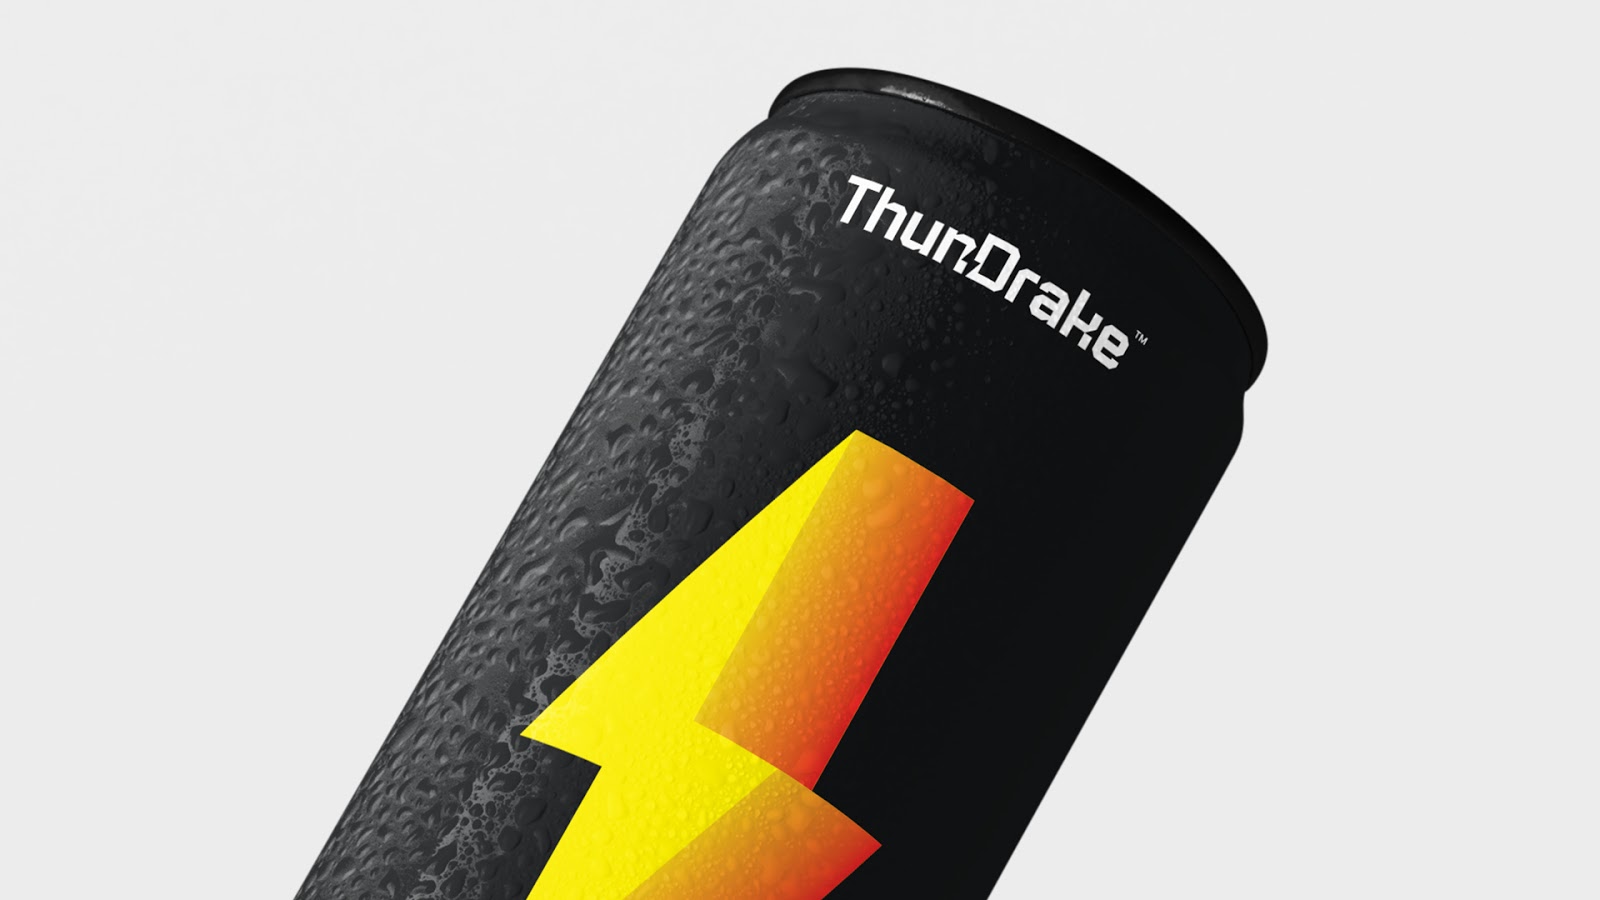 ThunDrake能量饮料概念包装设计